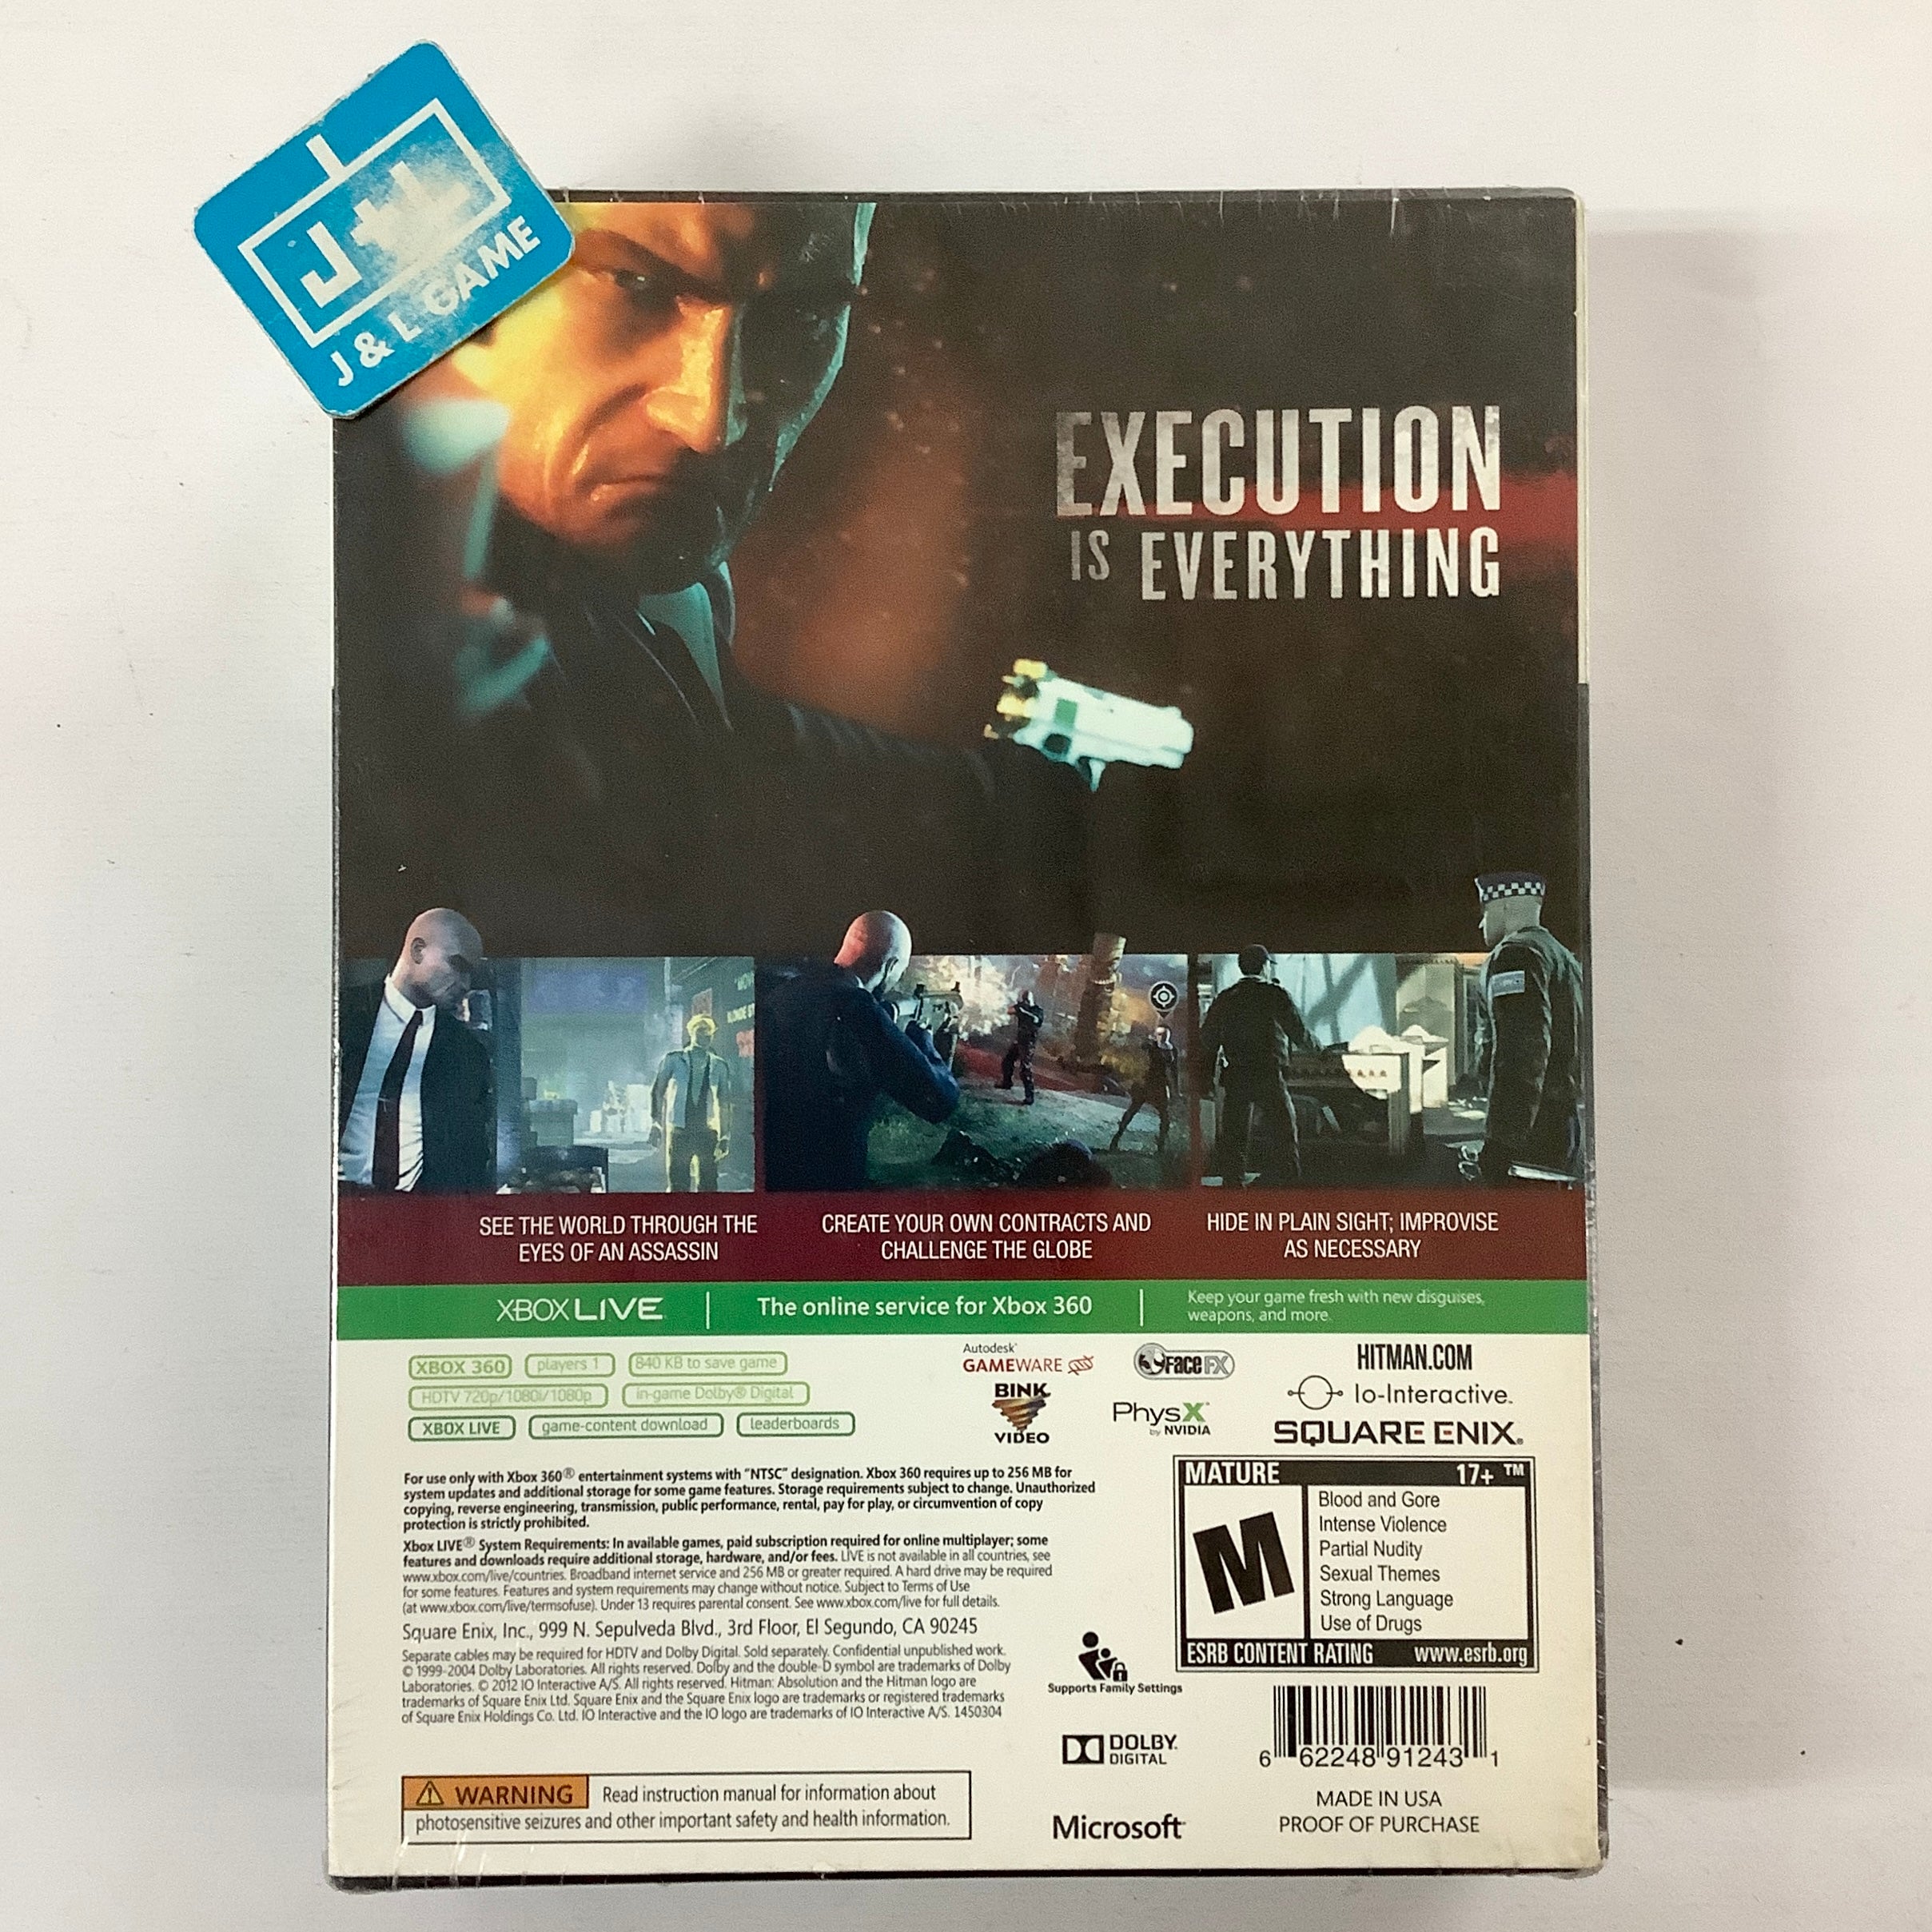 Hitman: Absolution (Professional Edition) - Xbox 360 Video Games Square Enix   